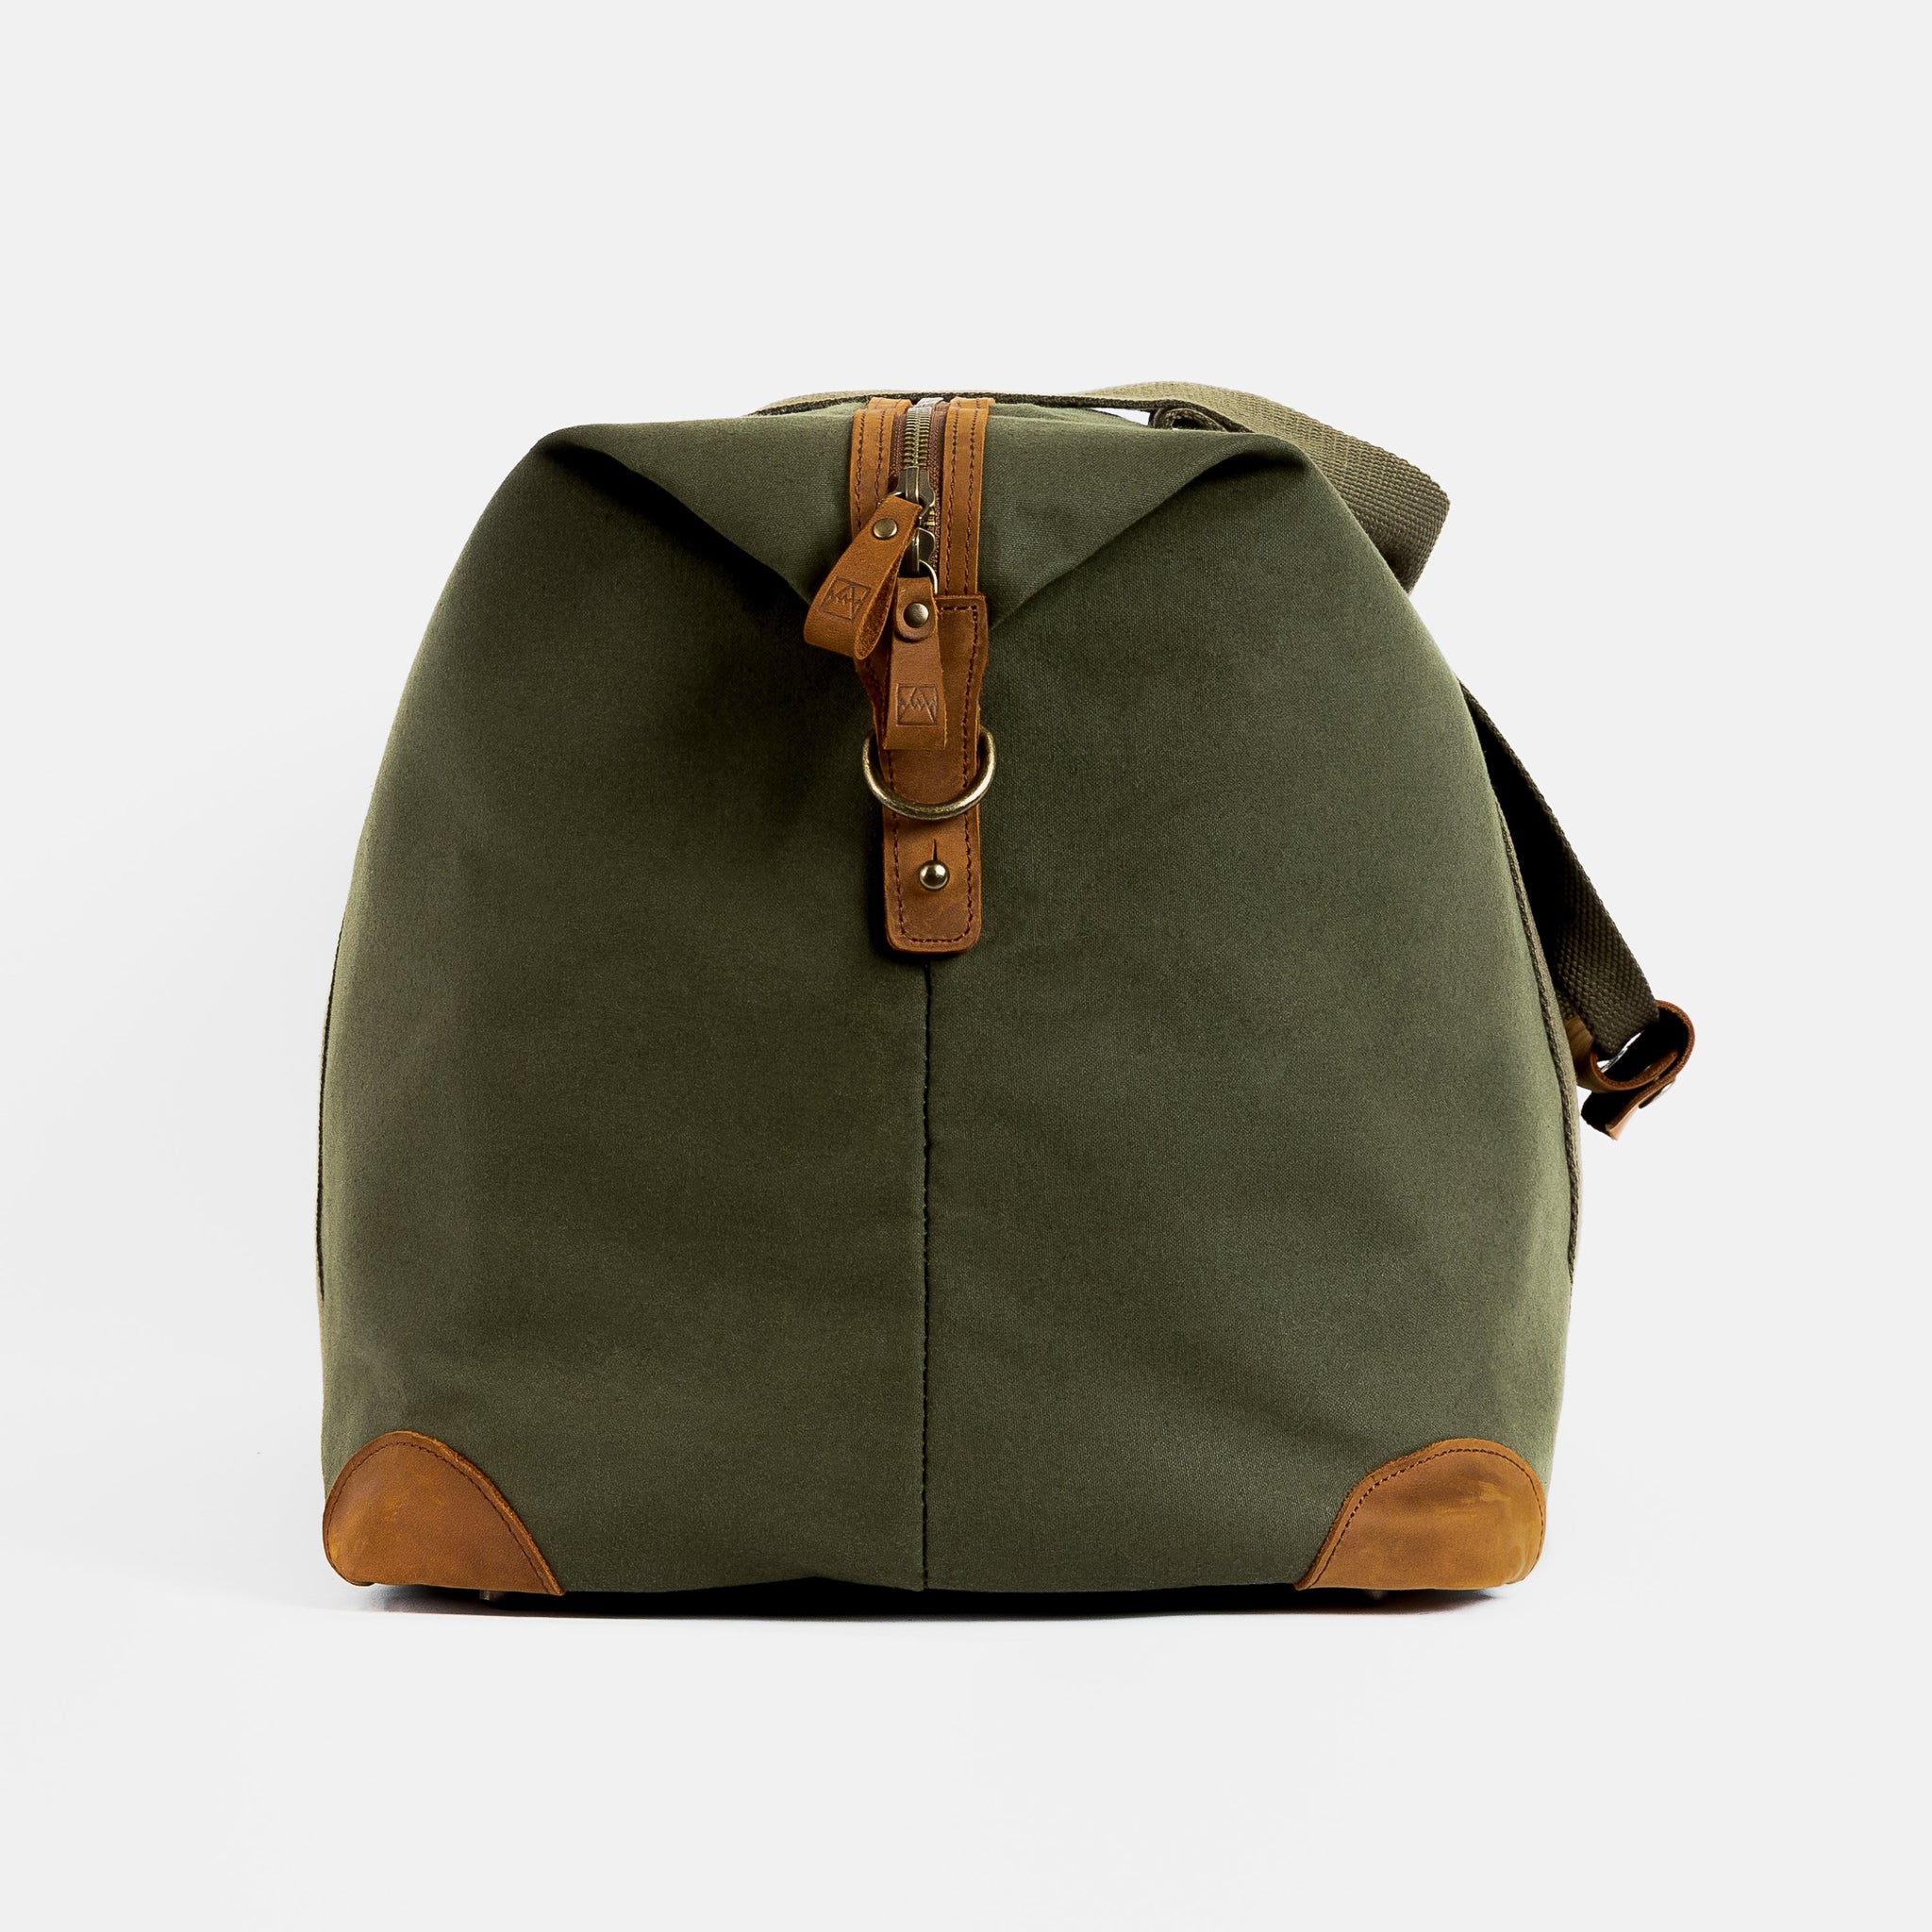 The Weekender XL duffle bag in Olive